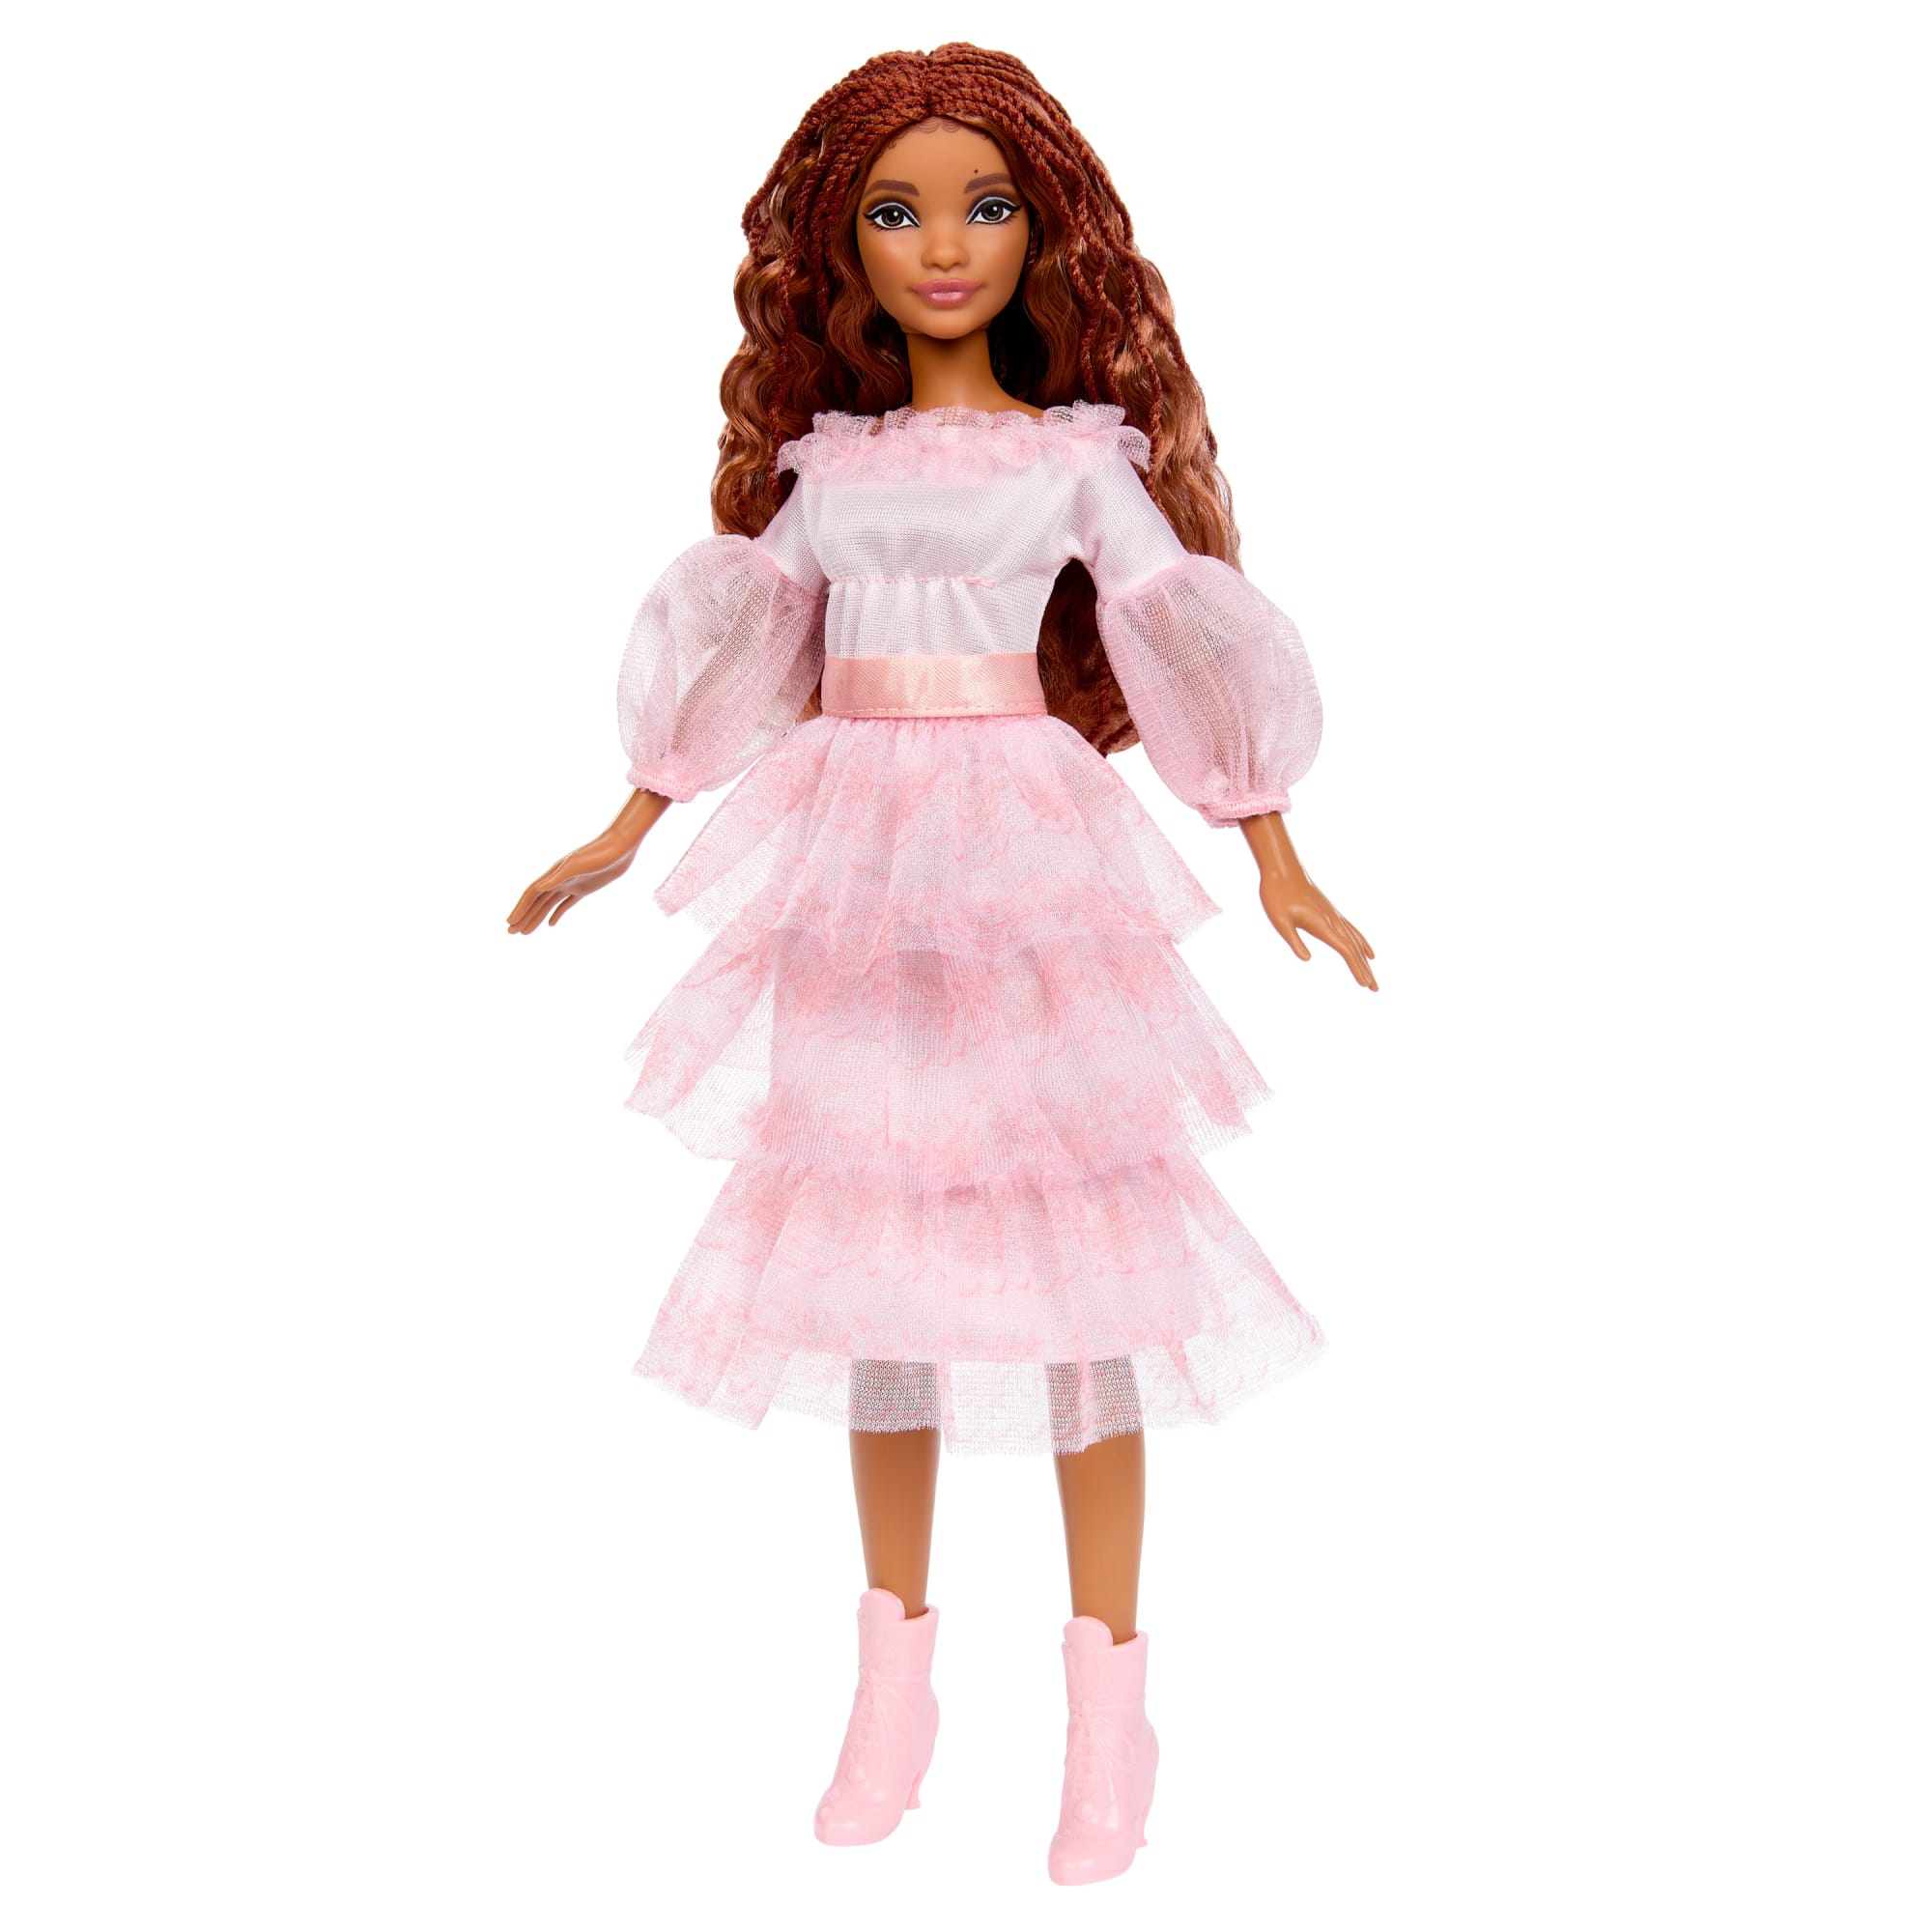 MERMAID GOWN HANDMADE Atelier 4 Silkstone Barbie Fashion Model Doll Poppy  Parker $44.99 - PicClick